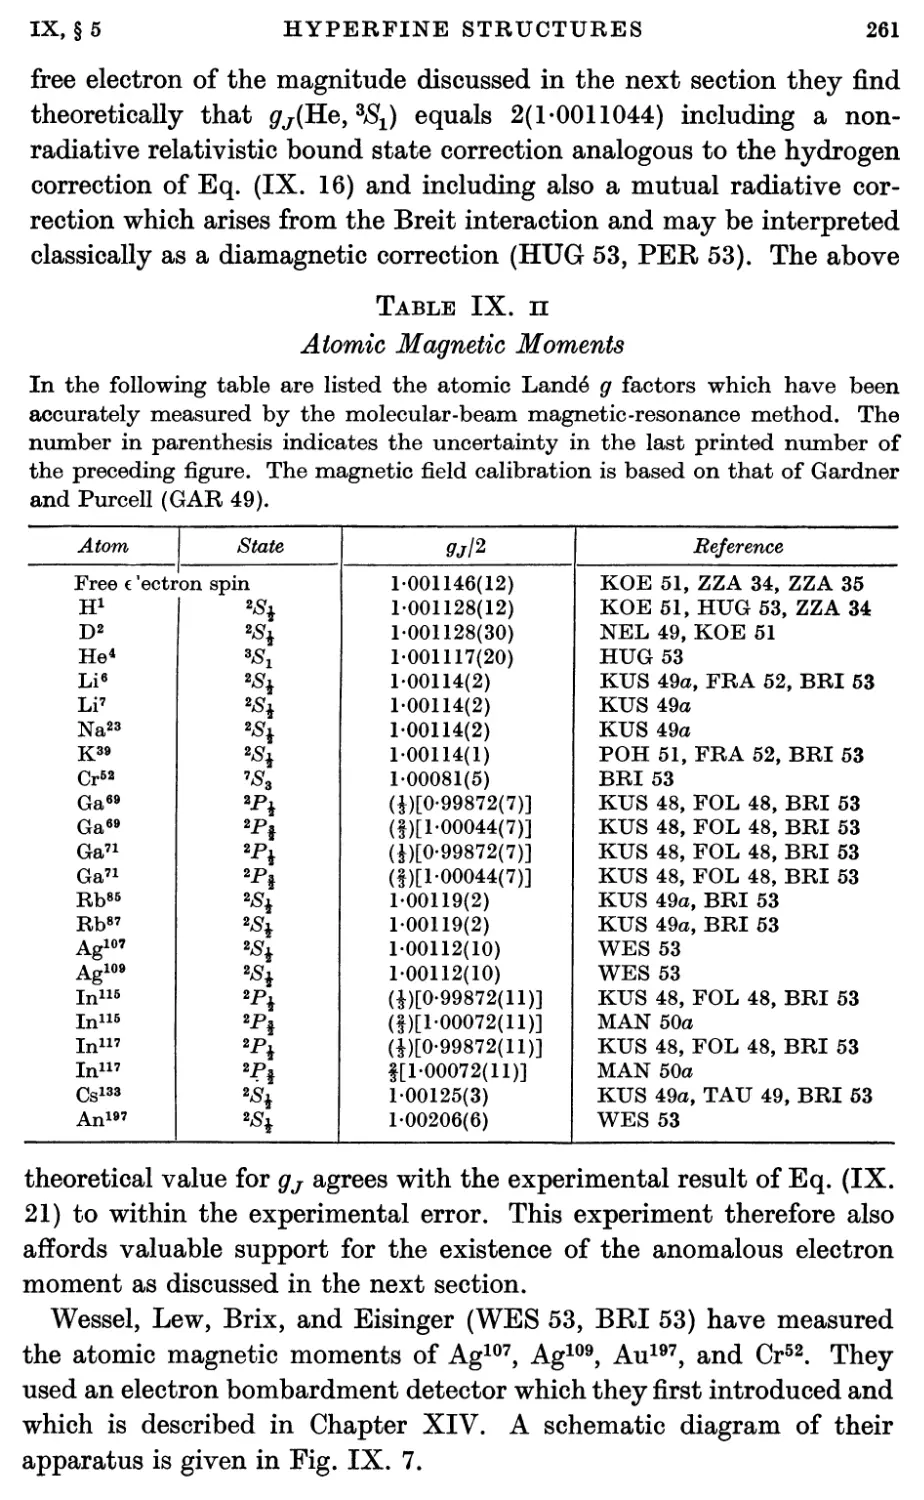 IX.5.2. The anomalous electron magnetic moment